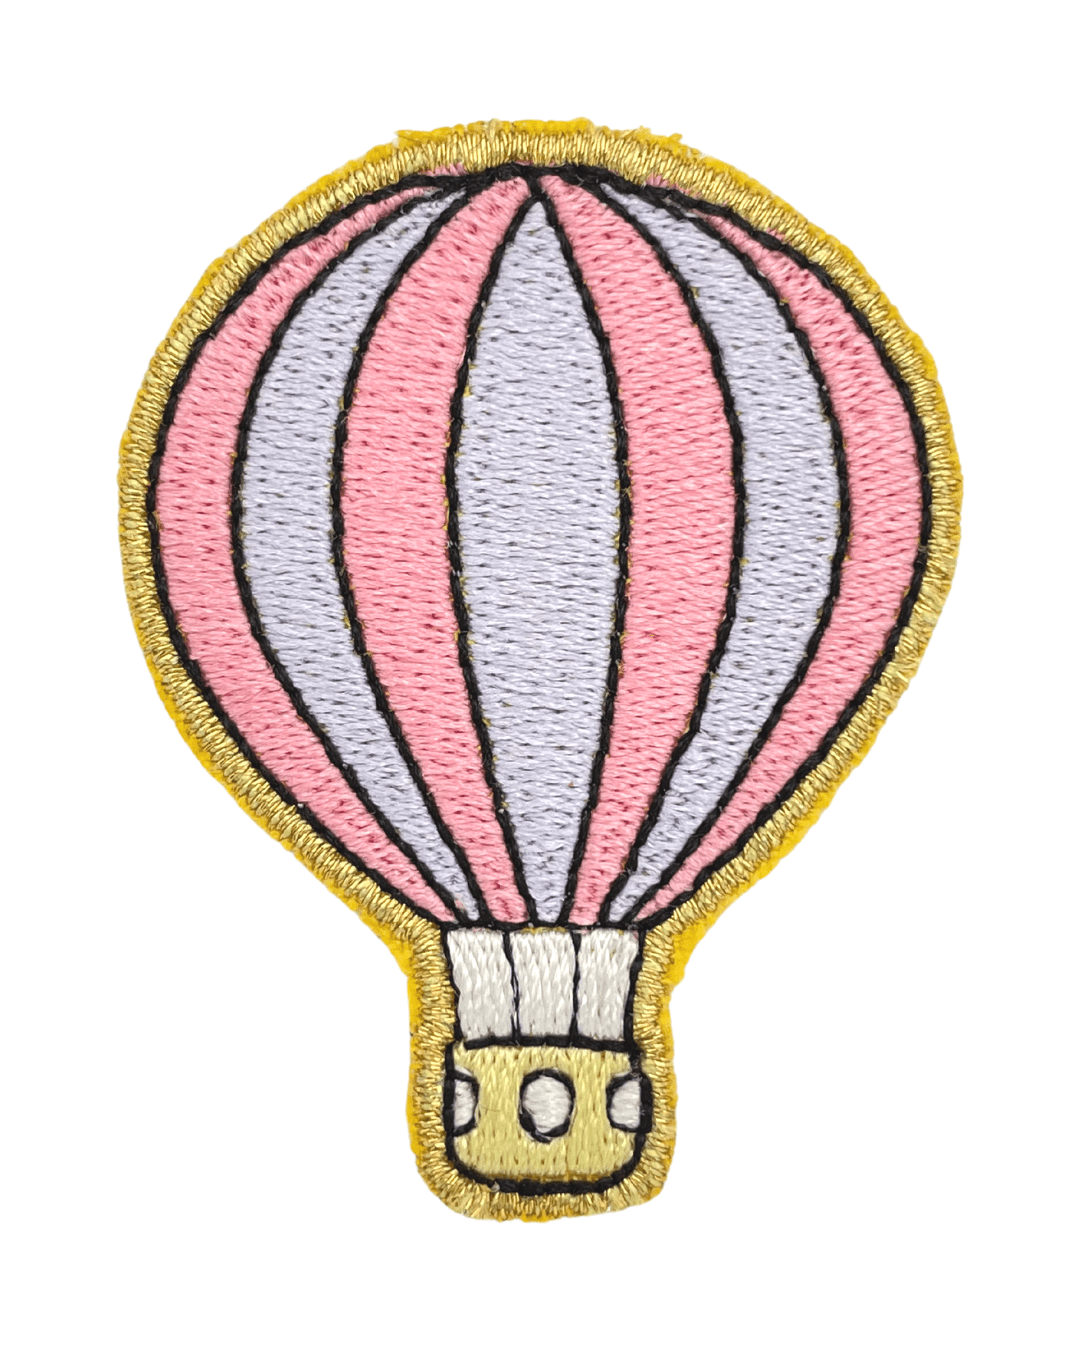 Hot Air Balloon Sticker Patch - American Deadstock